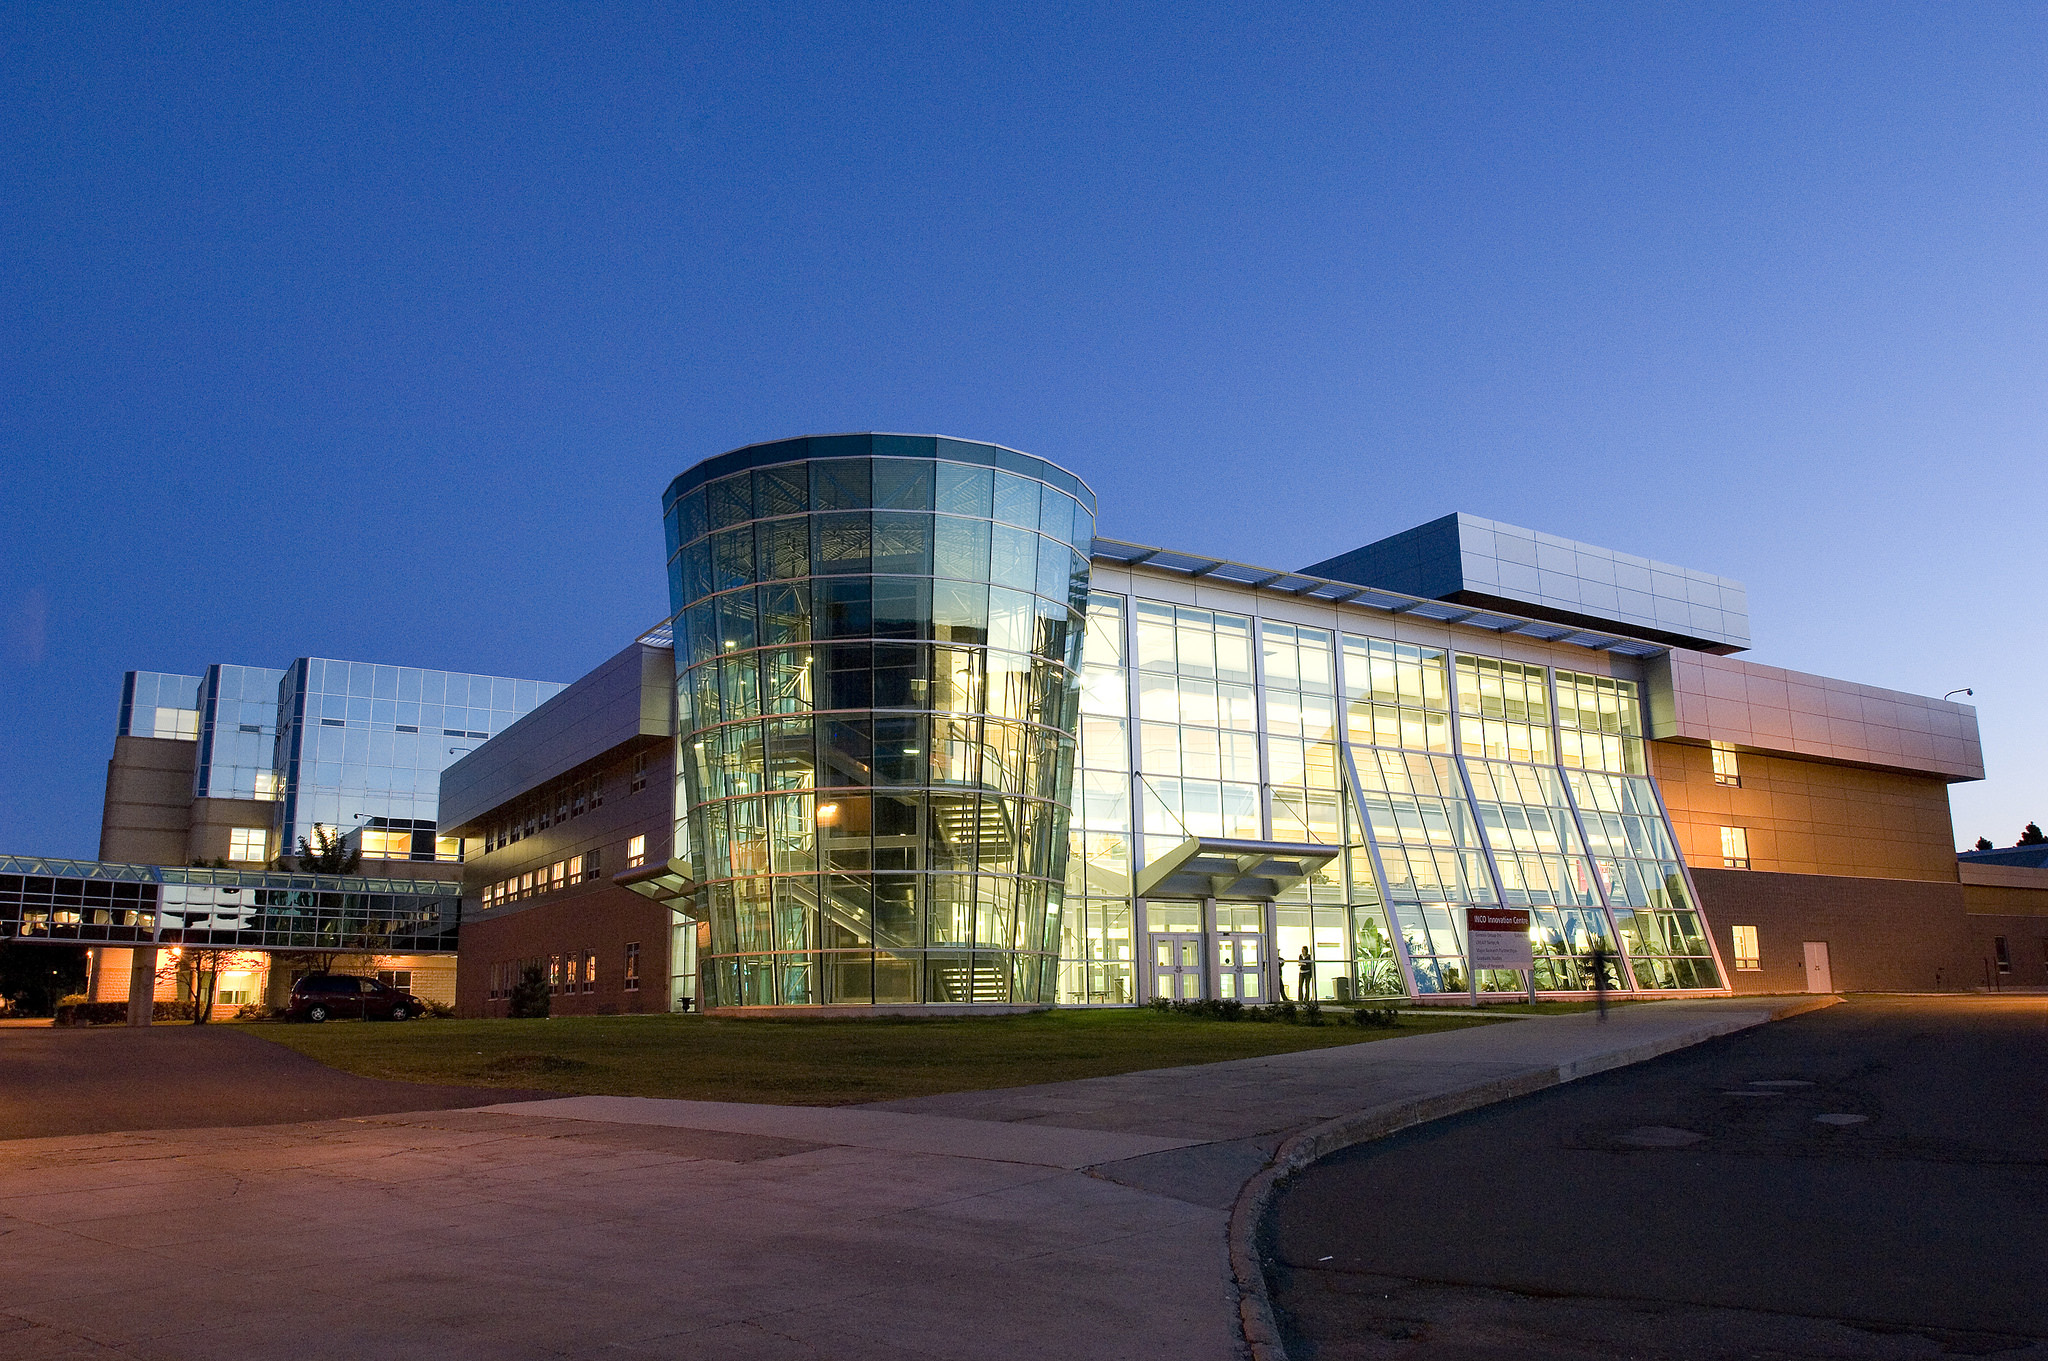 Memorial University of Newfoundland campus at dusk